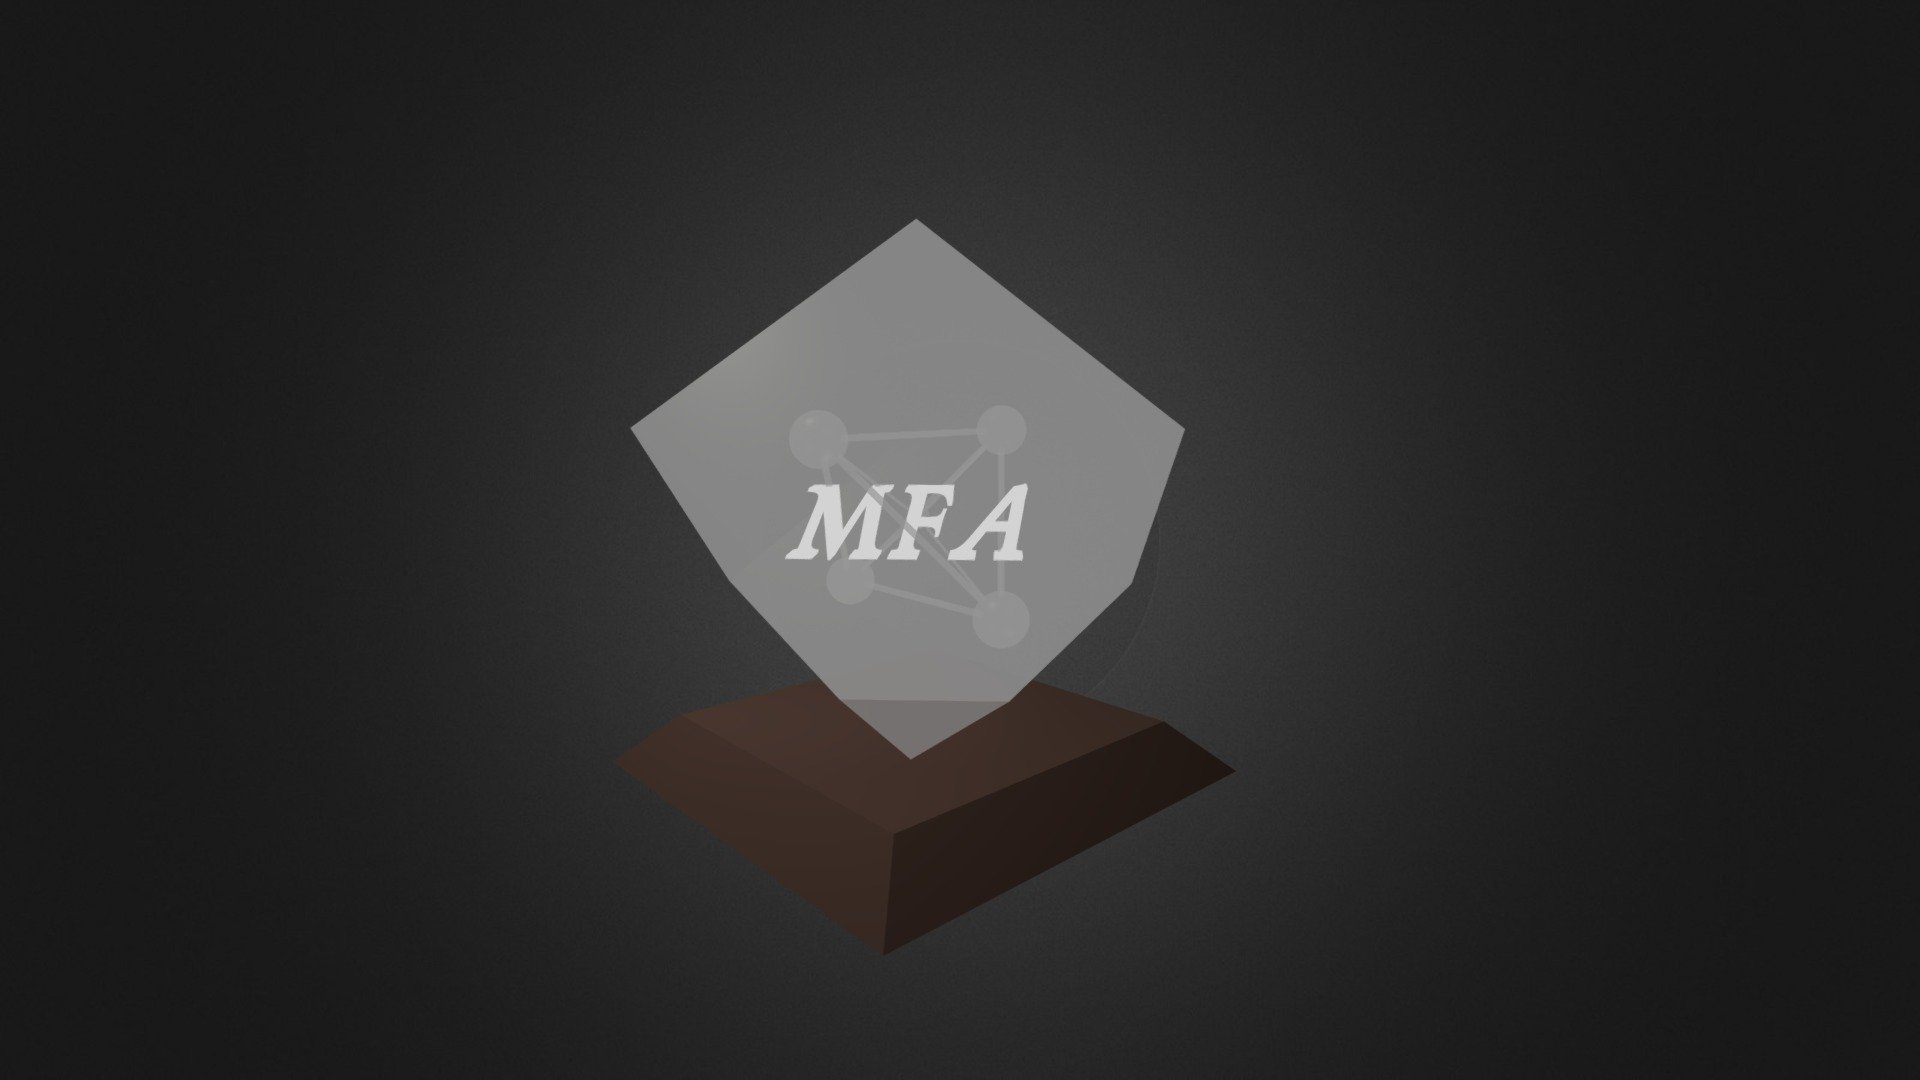 MFA logo in glass cube